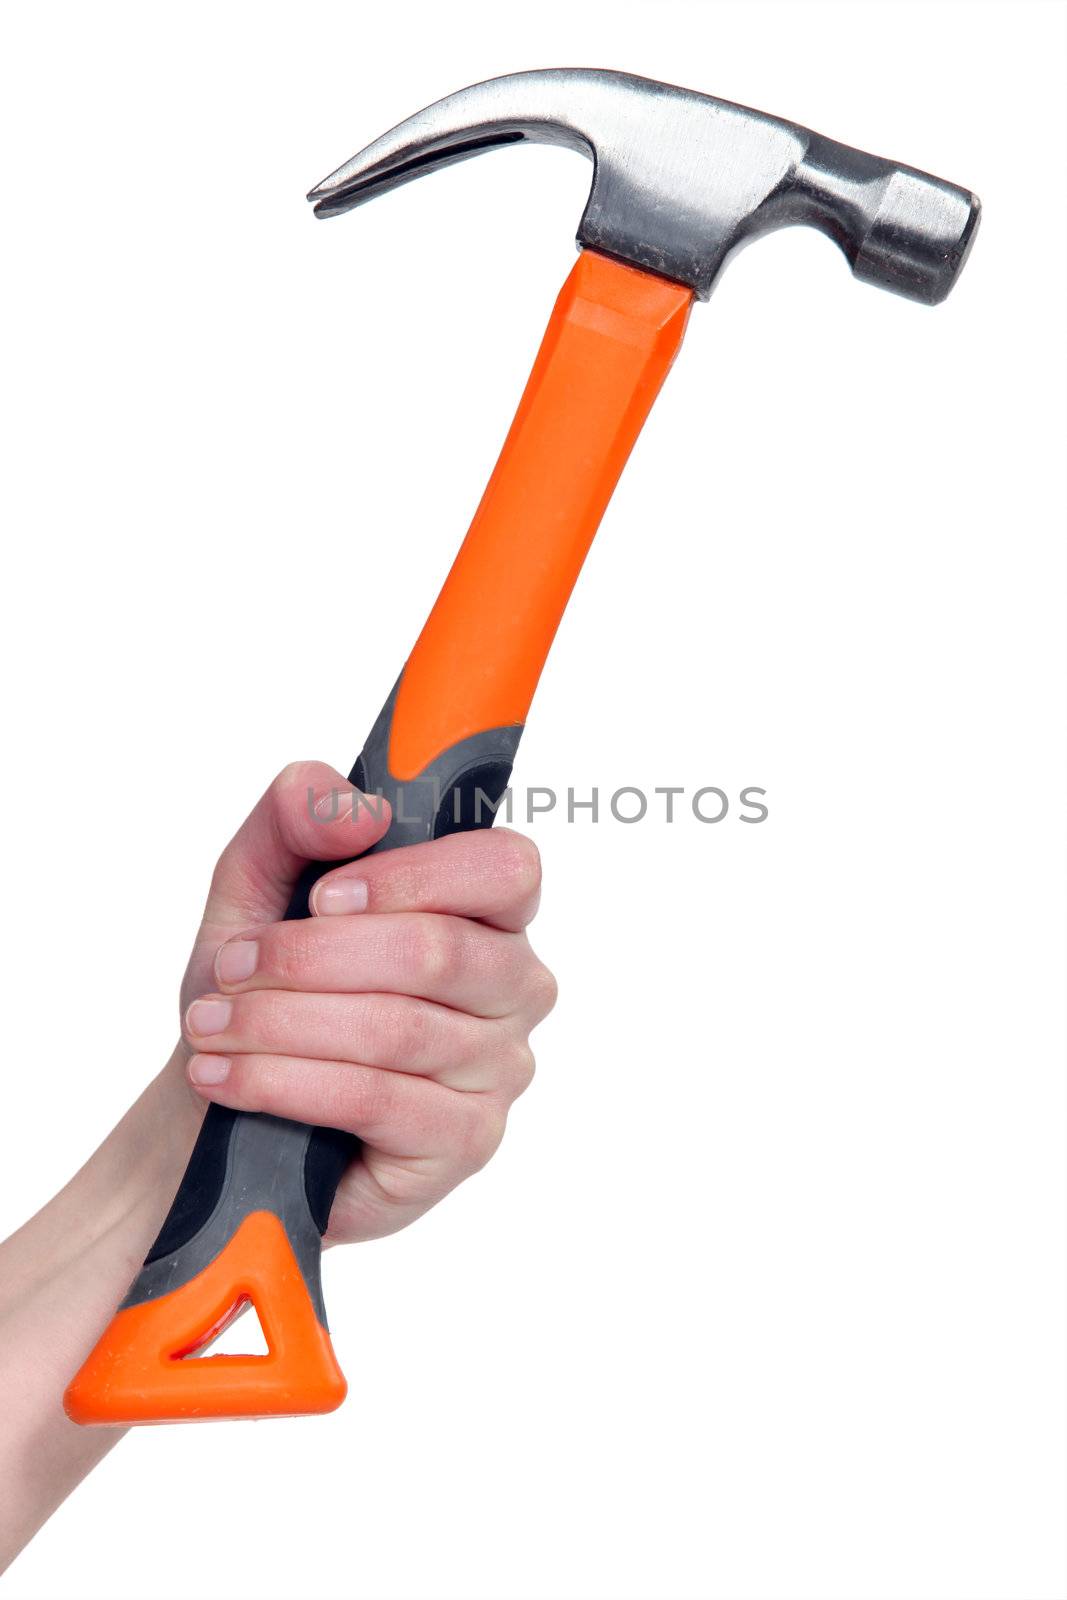 A hand holding a hammer.